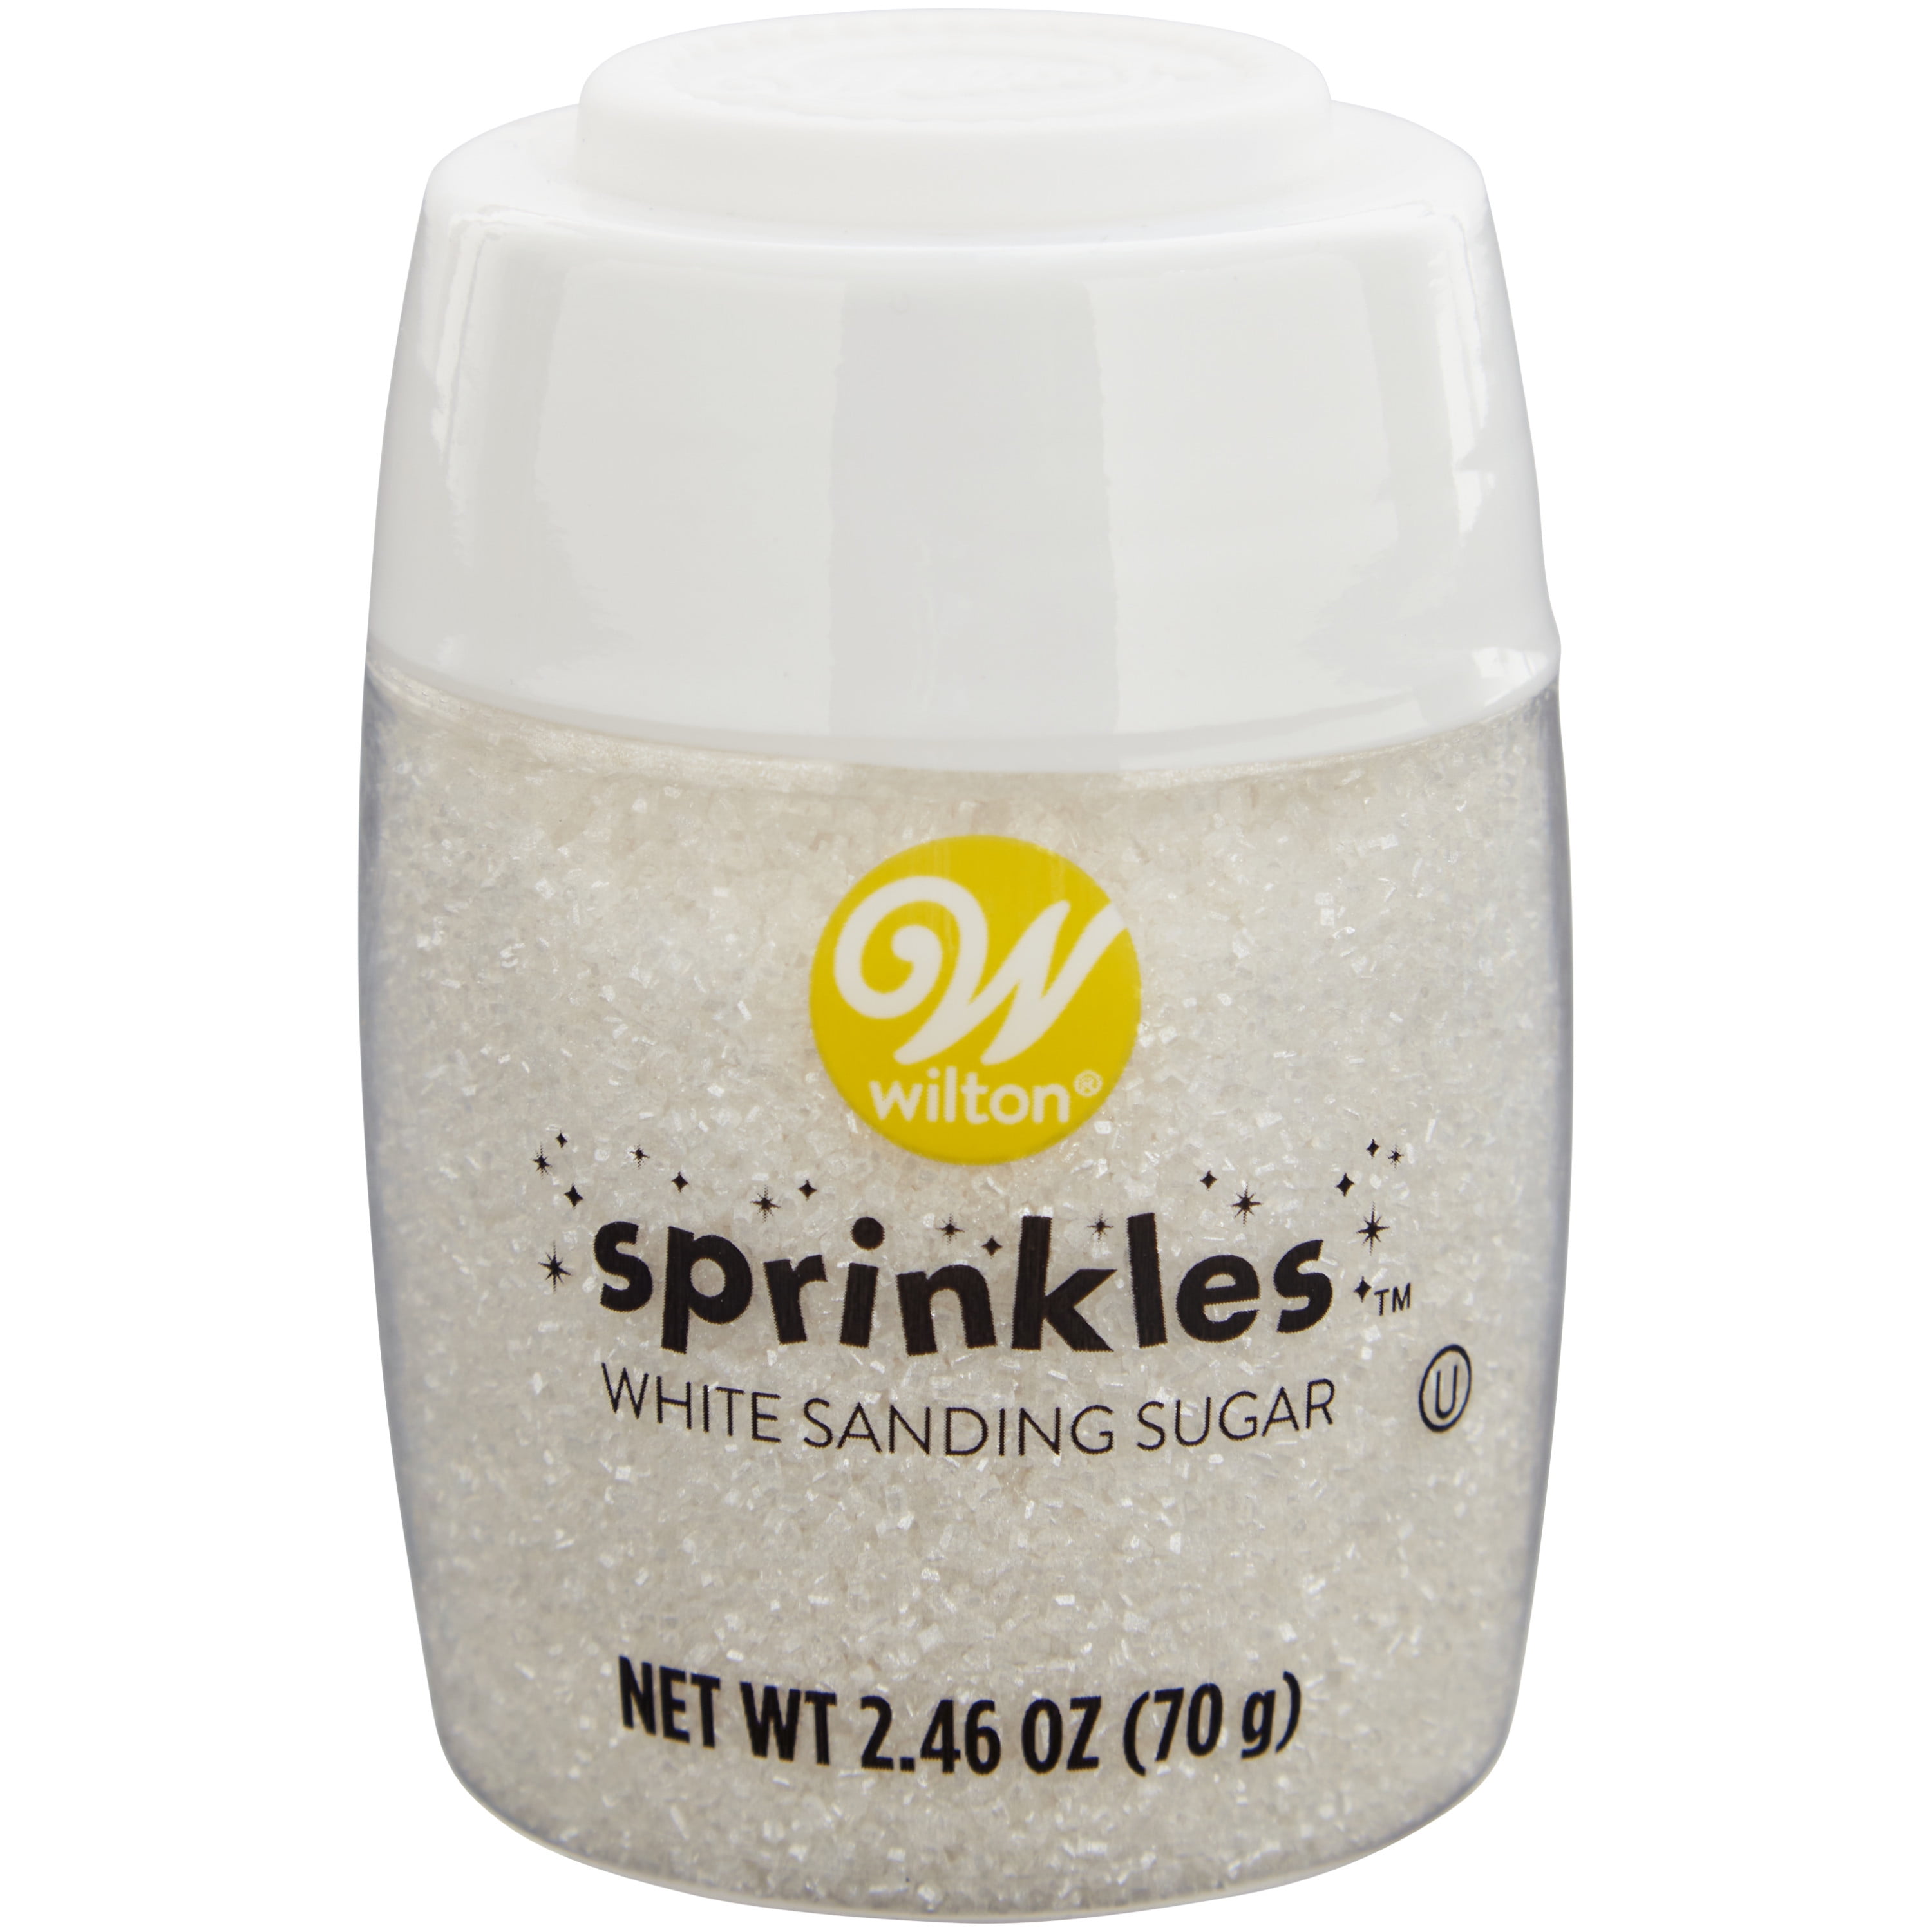 Wilton Sparkling White Sanding Sugar Sprinkles, 2.46 oz.